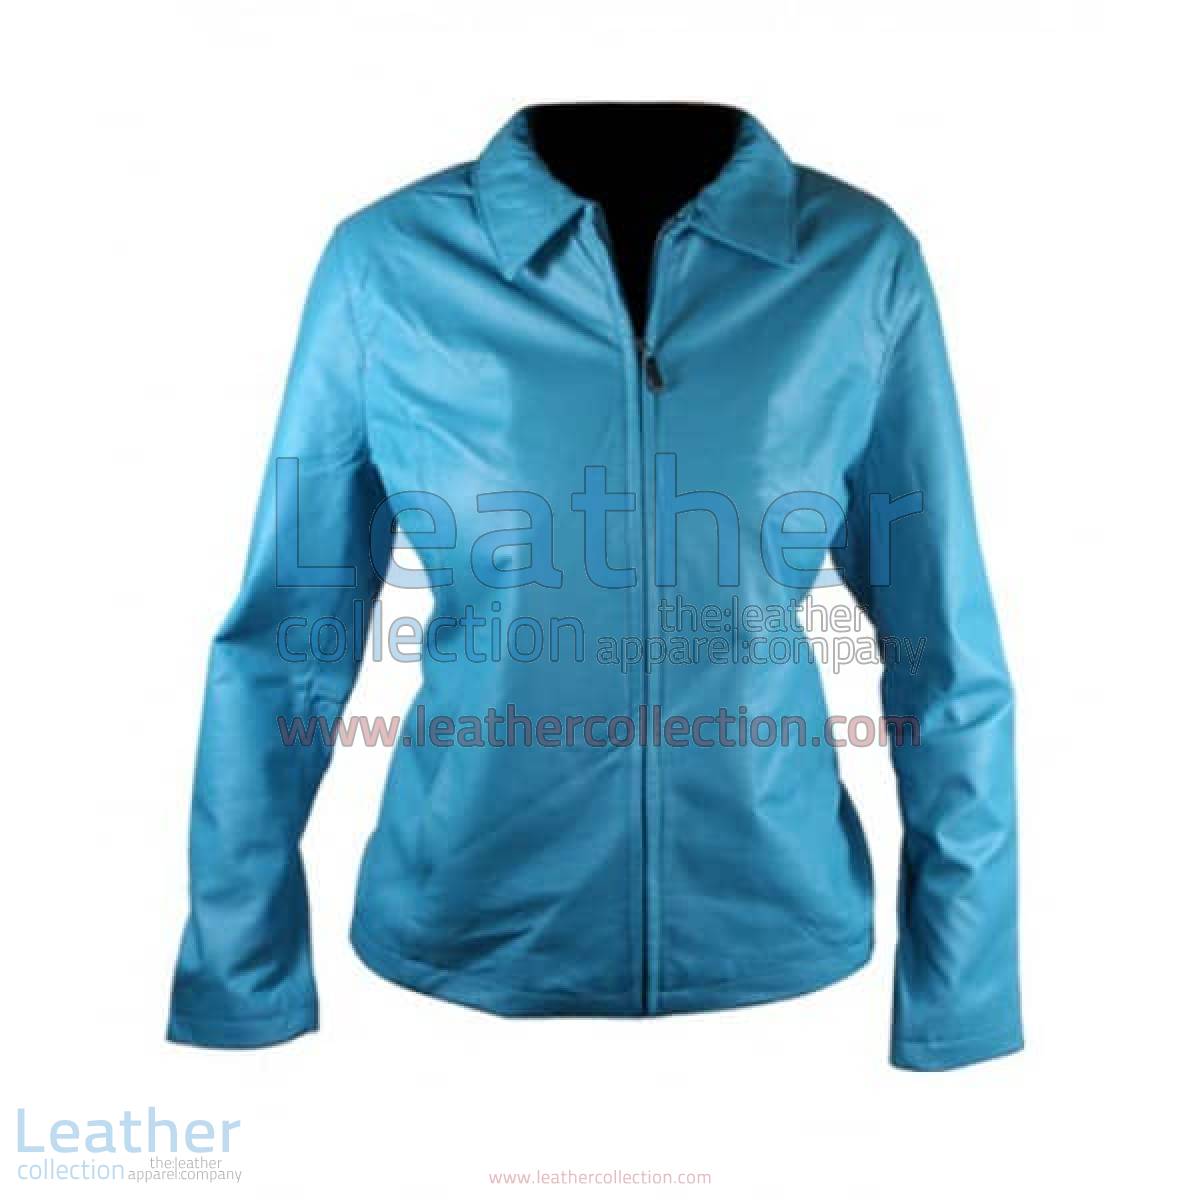 Classic Ladies Blue Leather Jacket | ladies blue leather jacket